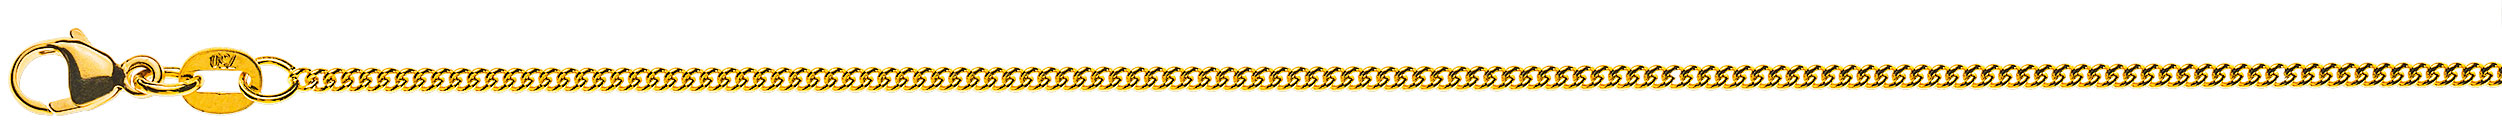 AURONOS Prestige Necklace yellow gold 18K round curb chain 38cm 1.6mm